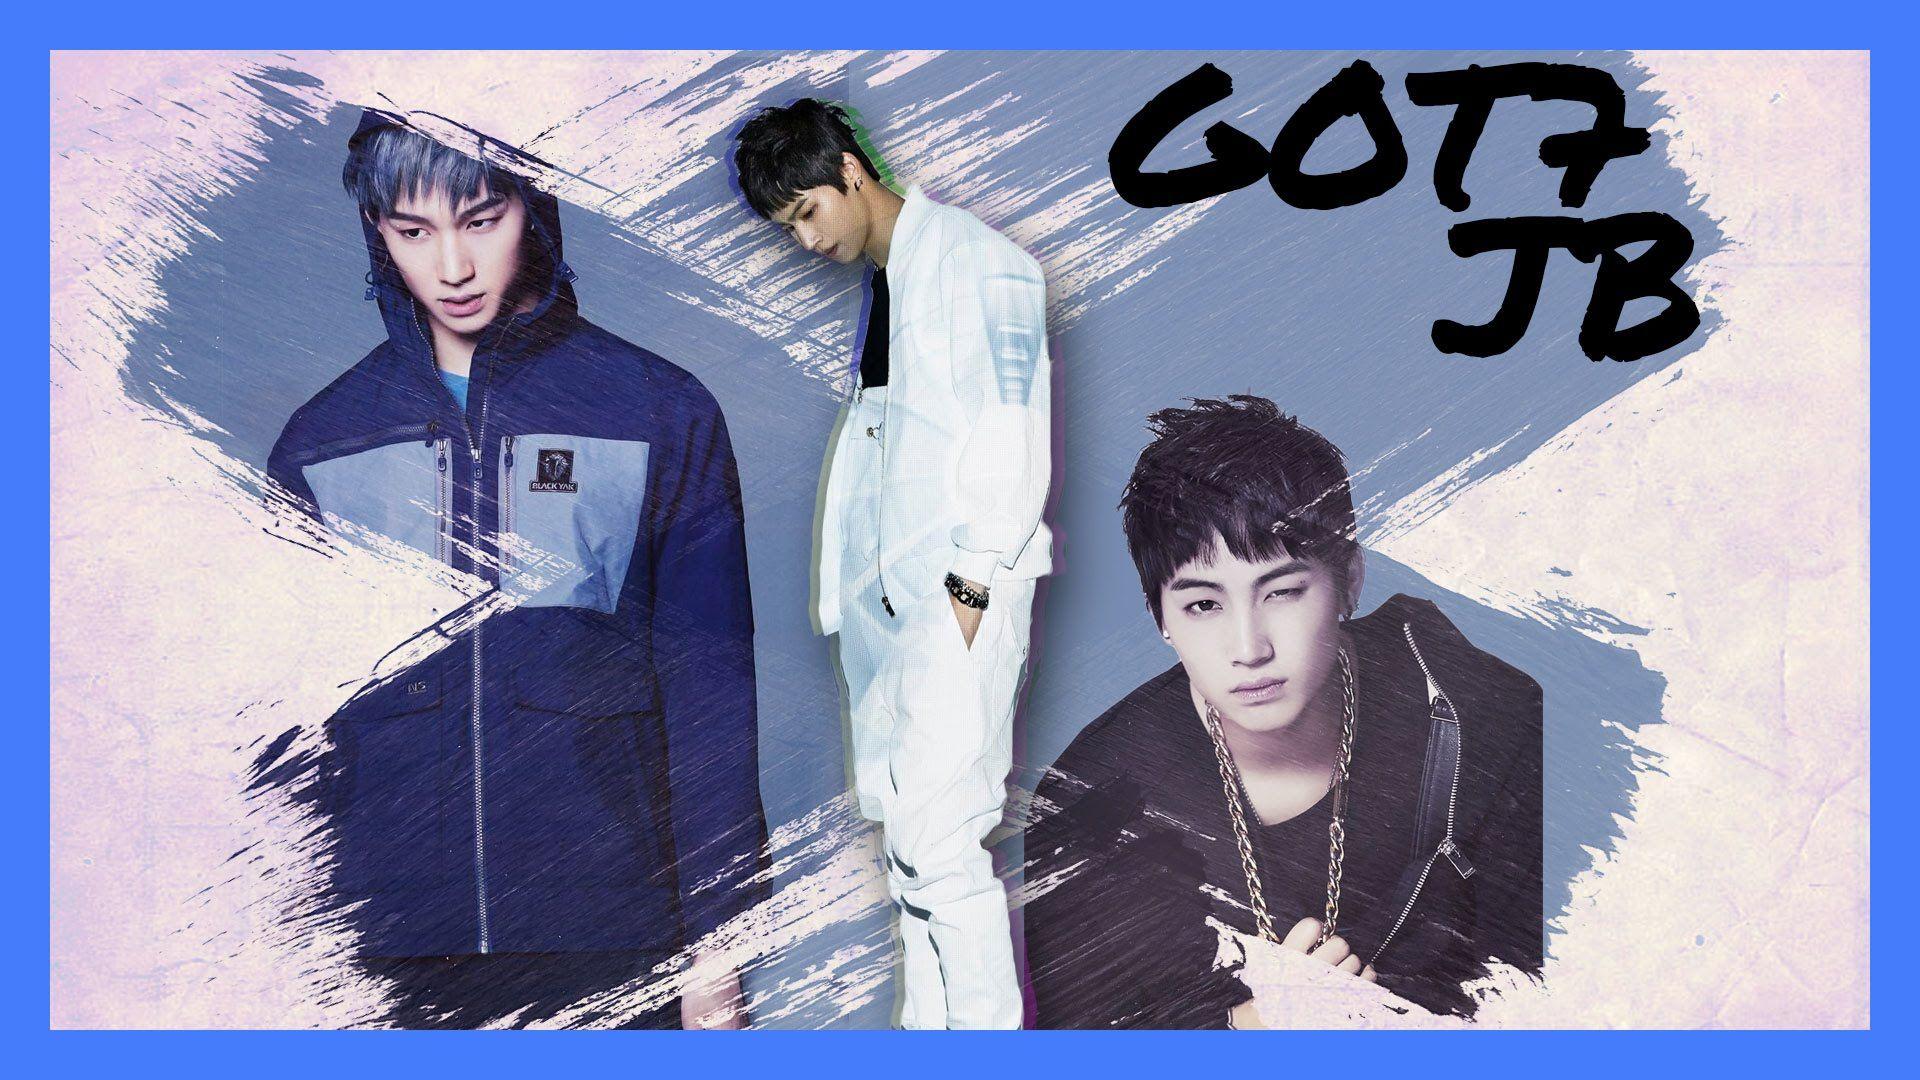 SpeedArt / Kpop Edit Got7 Identity JB (Im Jaebum) Wallpaper